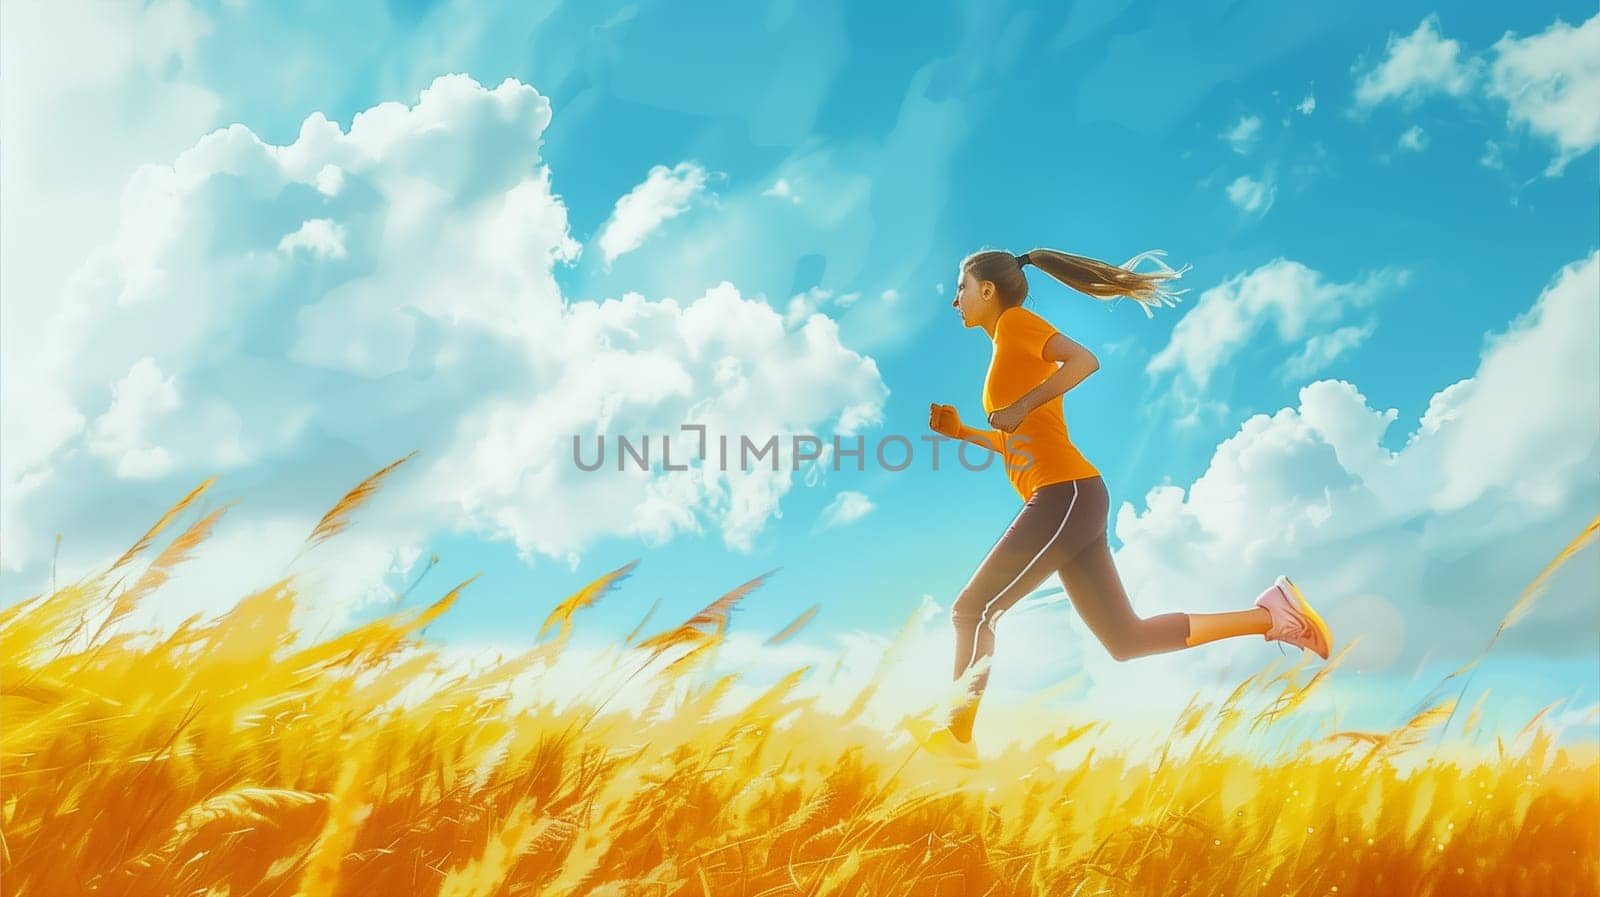 A woman running swiftly through a field of tall grass under the open sky.